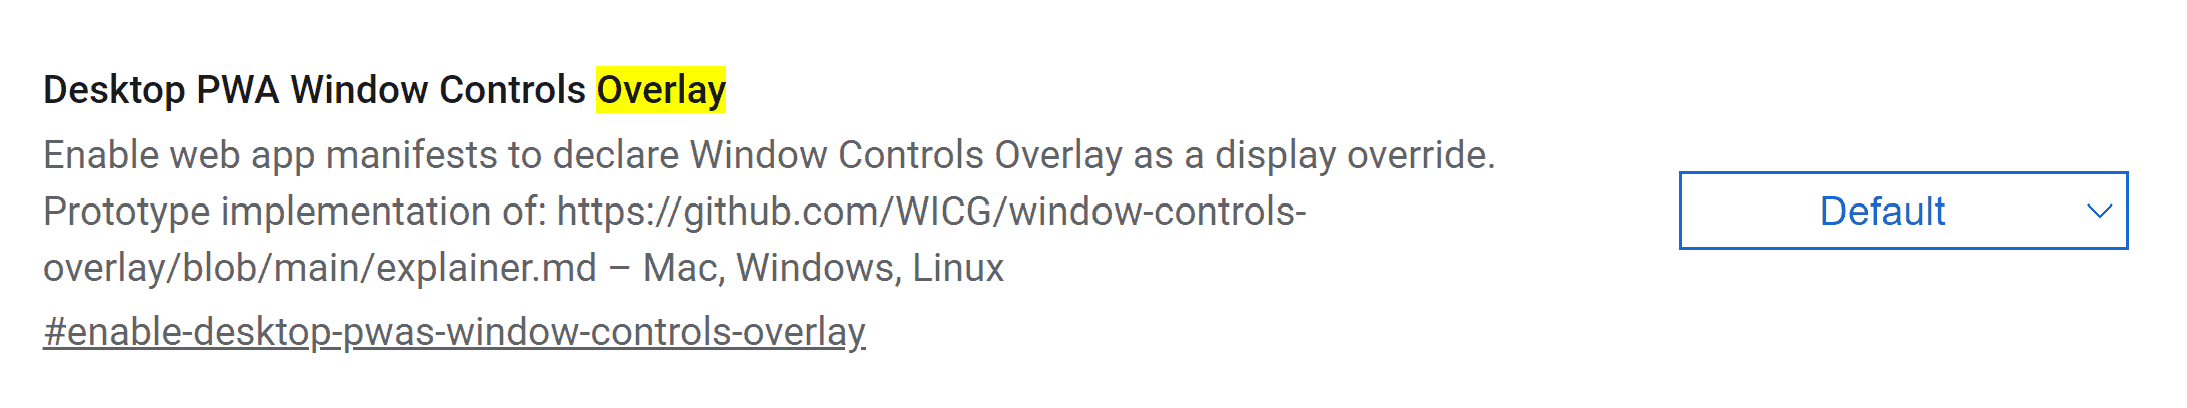 Desktop PWA windows control overlay